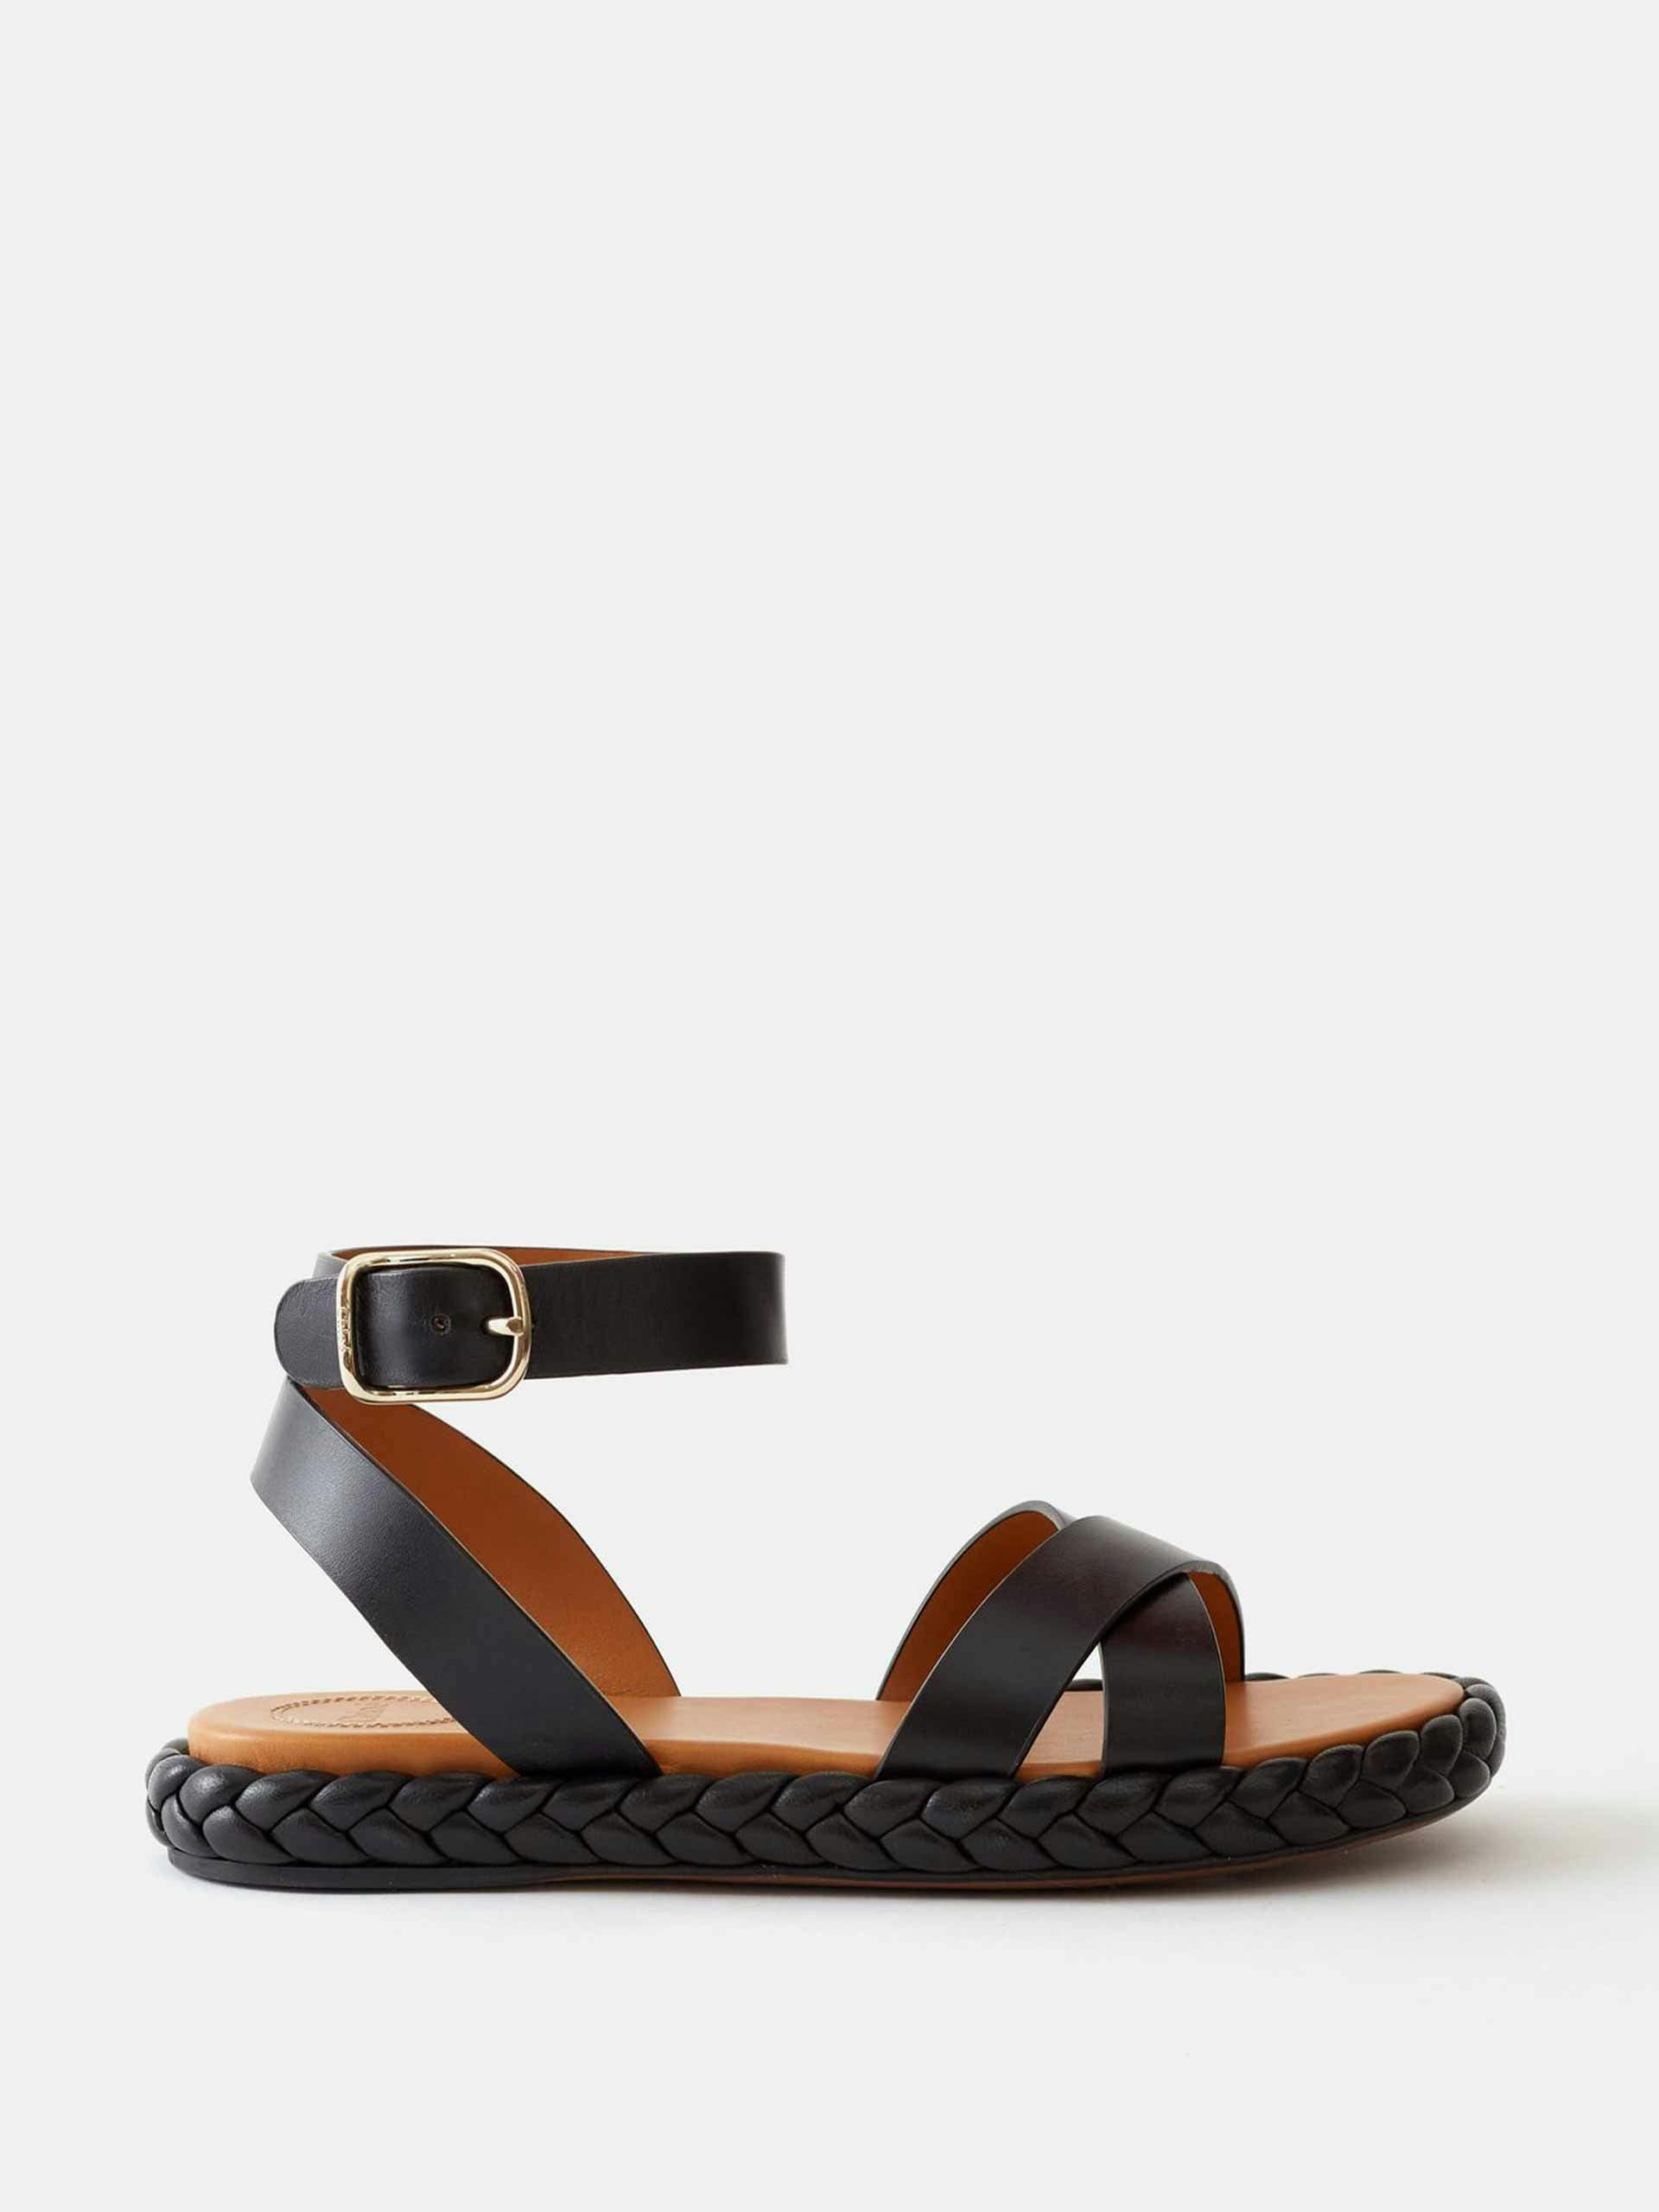 Black braided leather sandals